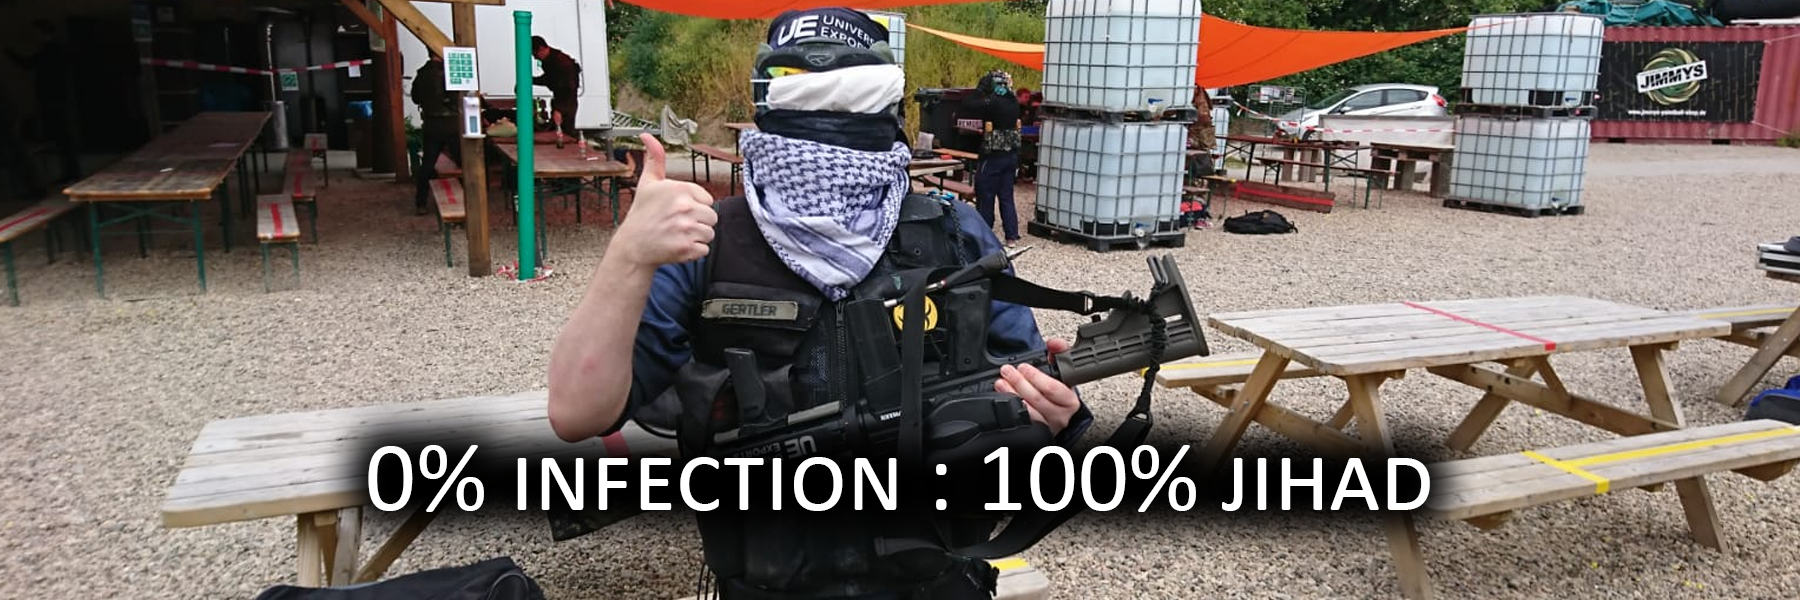 0% infection : 100% jihad